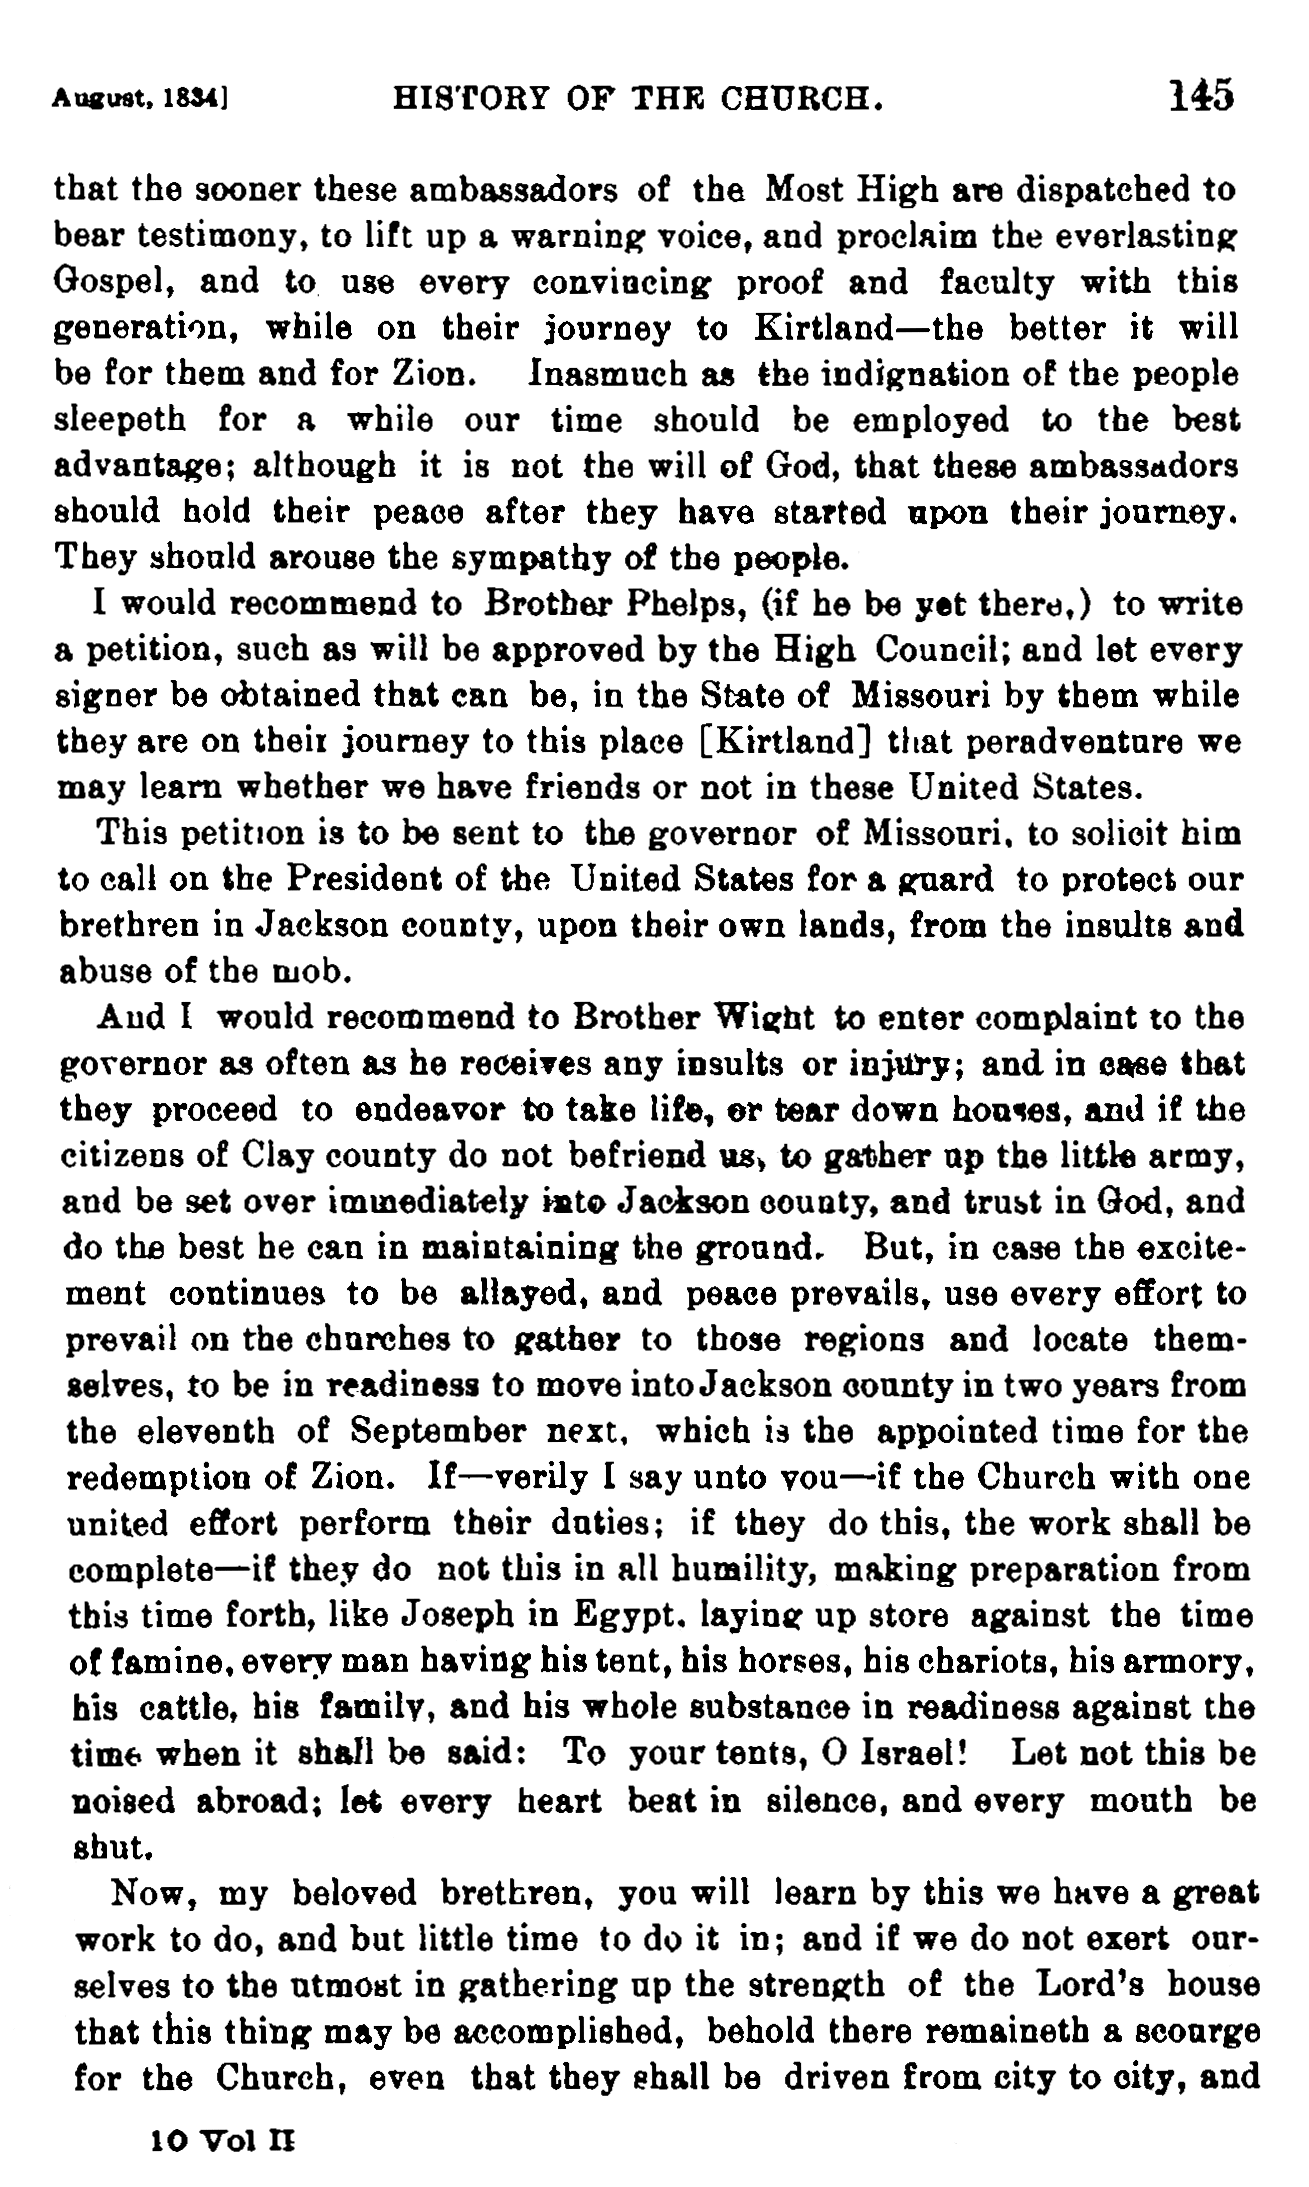 History of the Church, vol. 2, p. 145